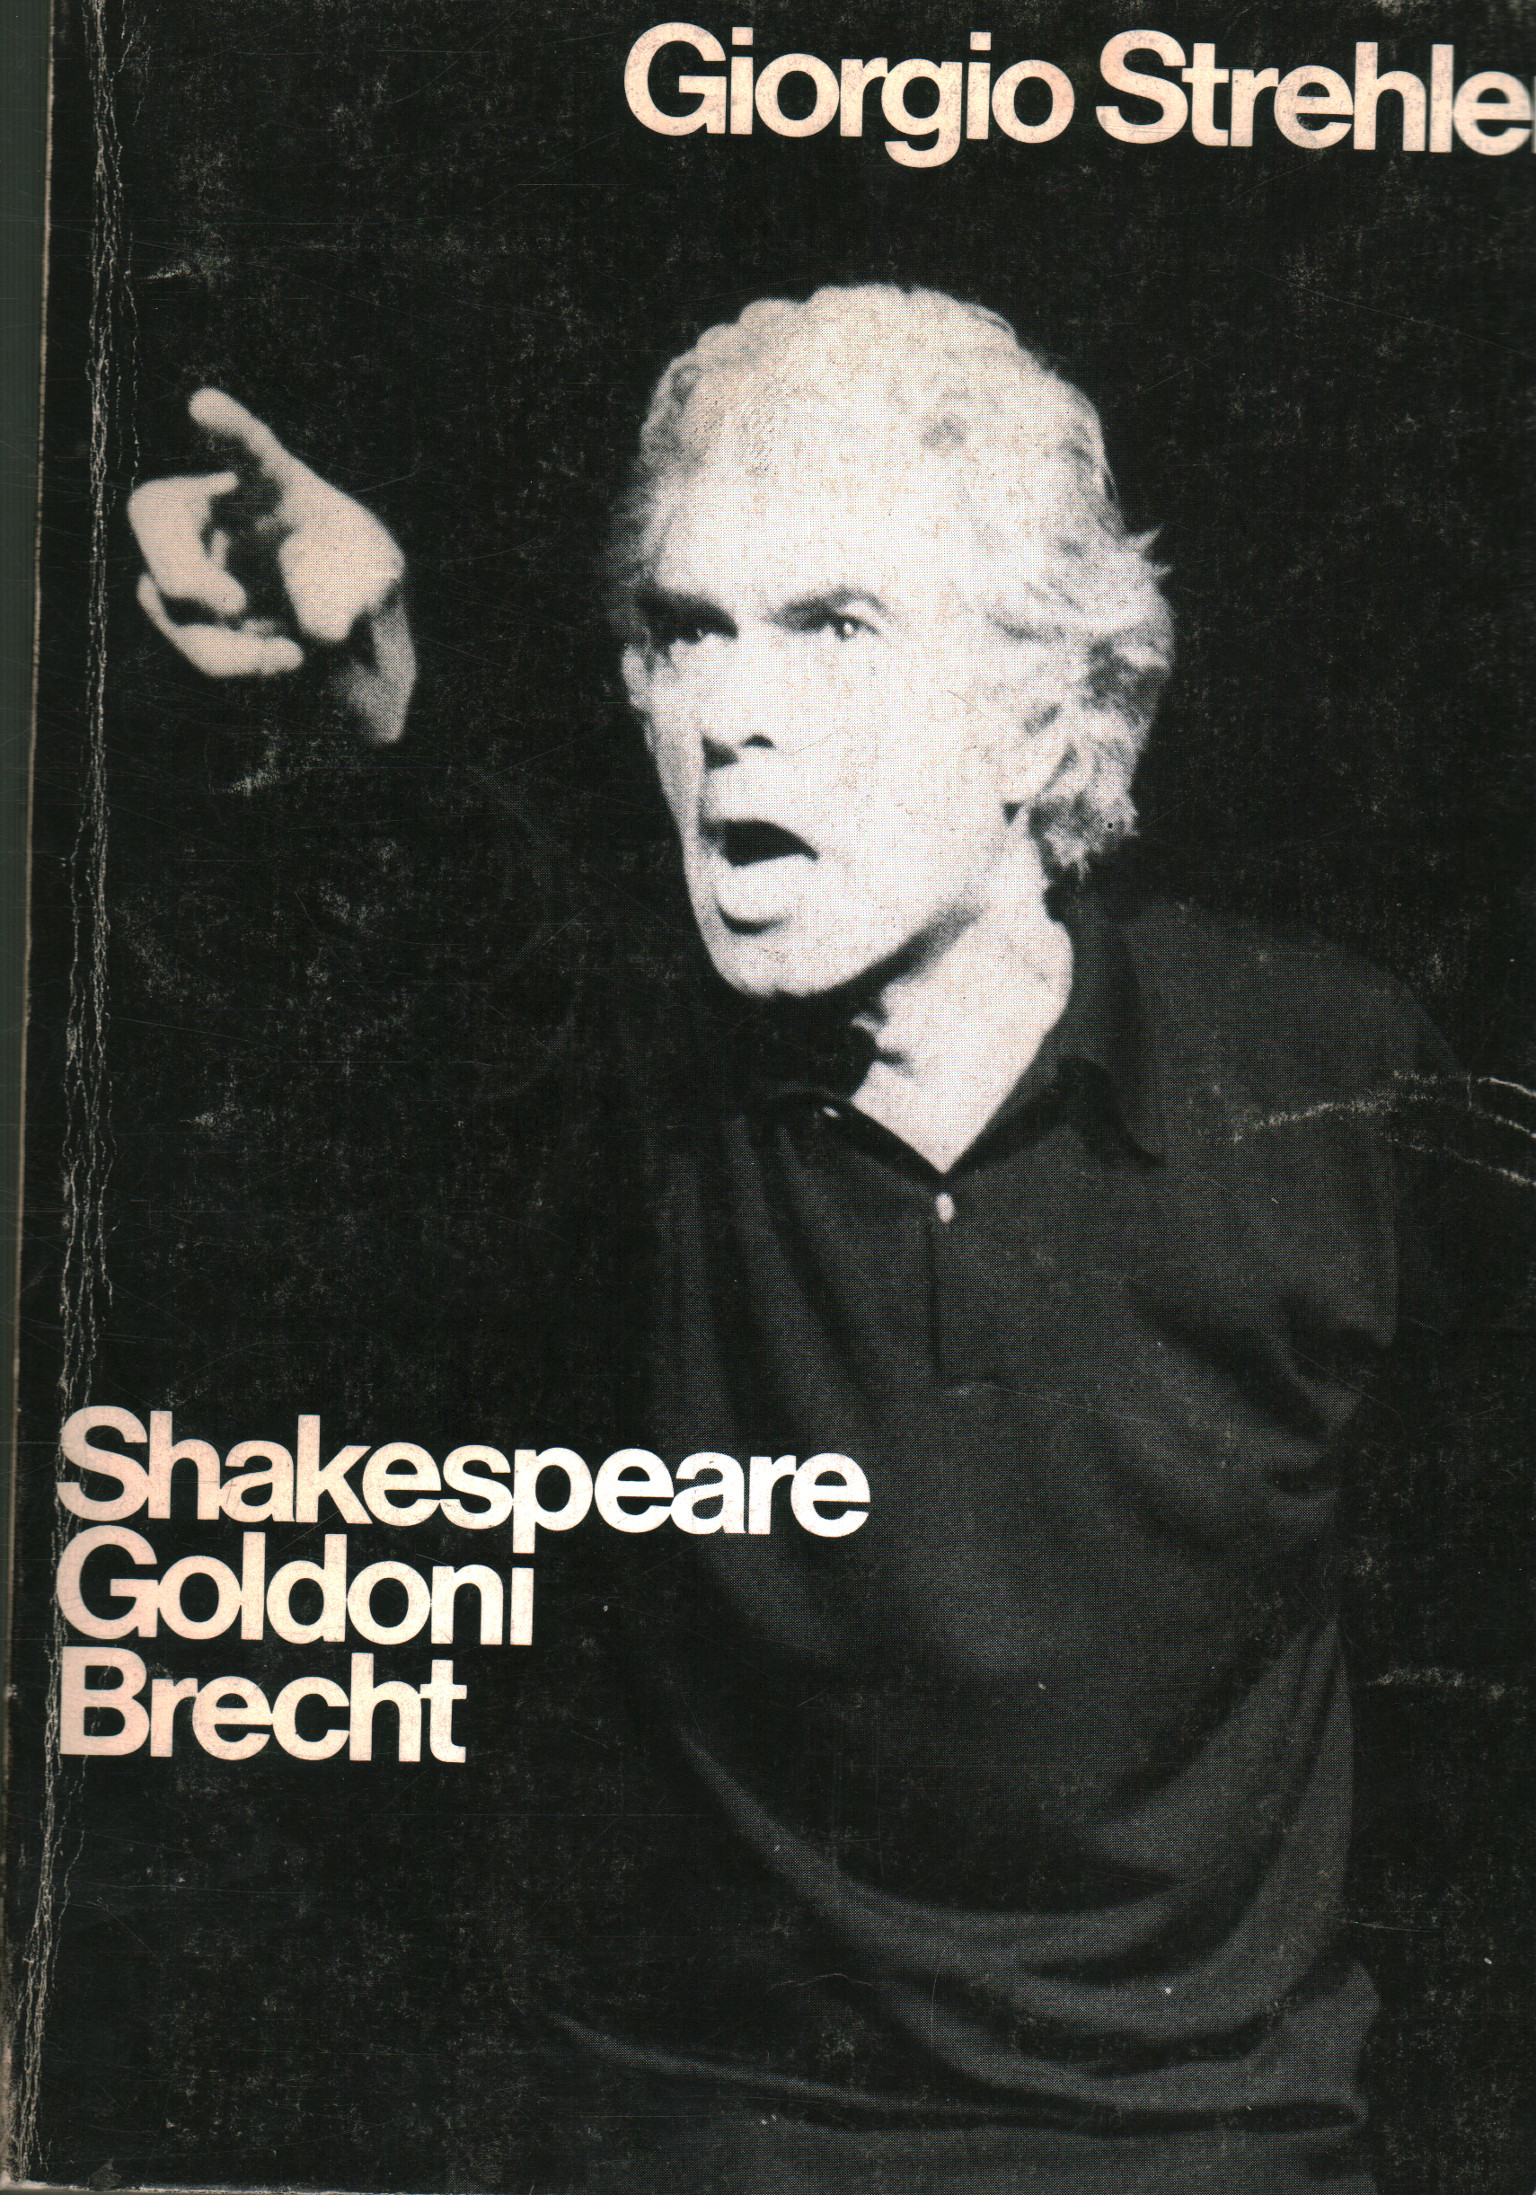 Shakespeare Goldoni Brecht, Giorgio Strehler